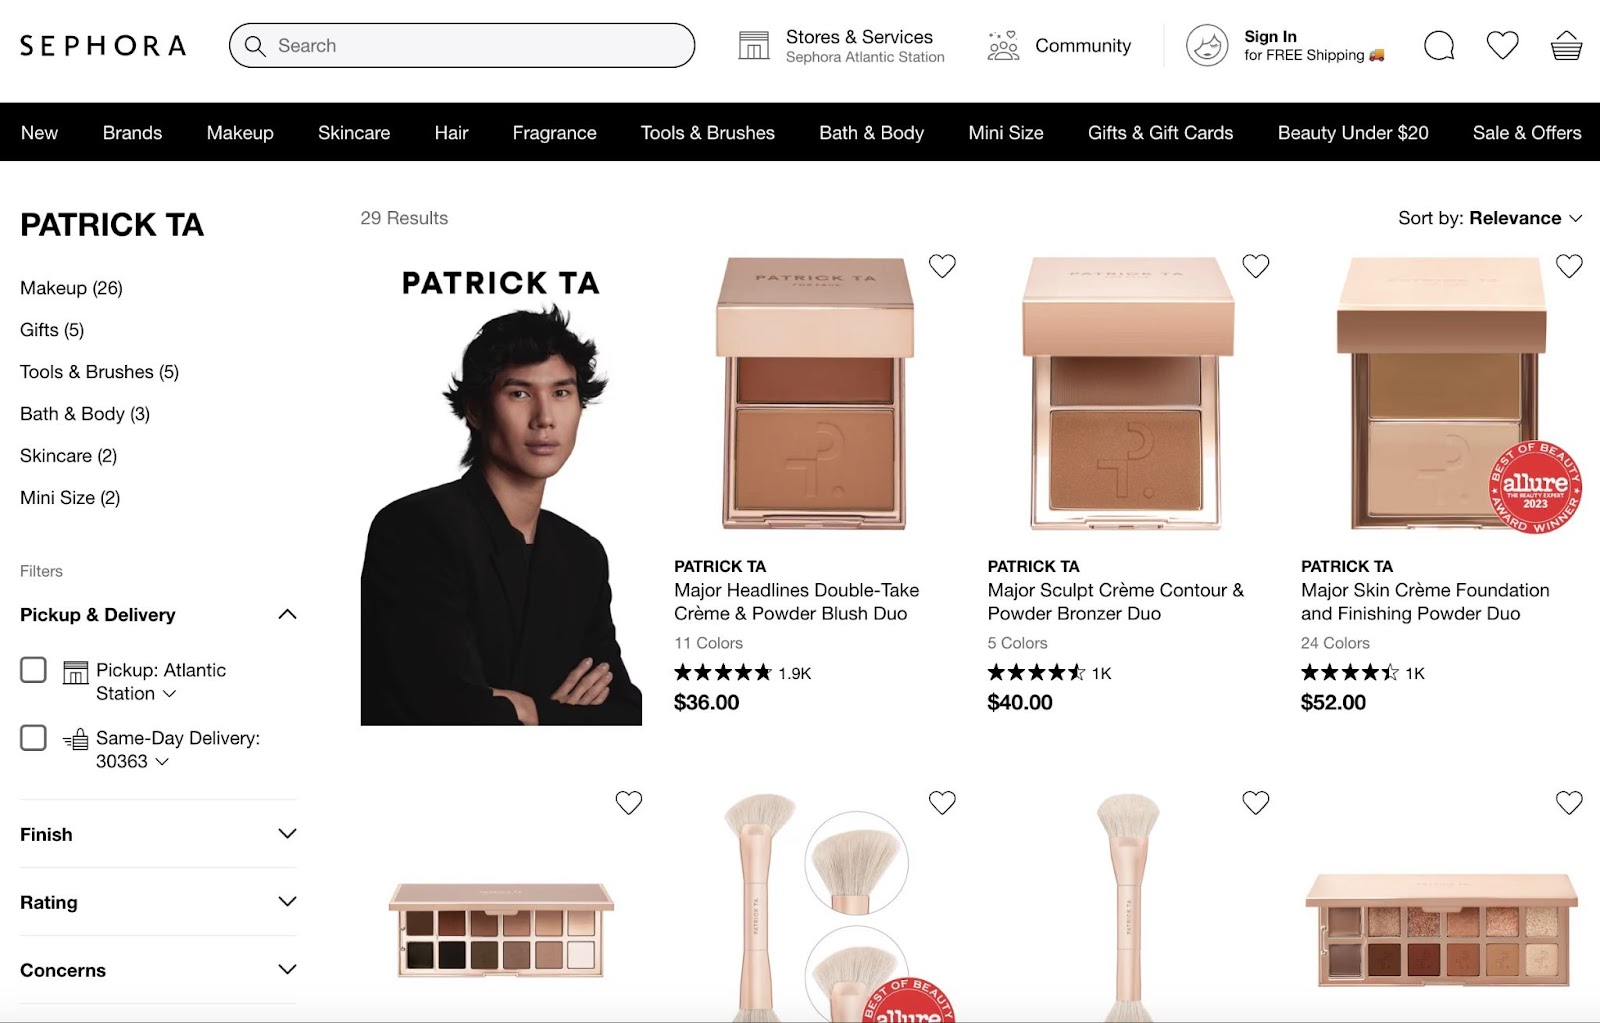 Patrick Ta's products on Sephora website